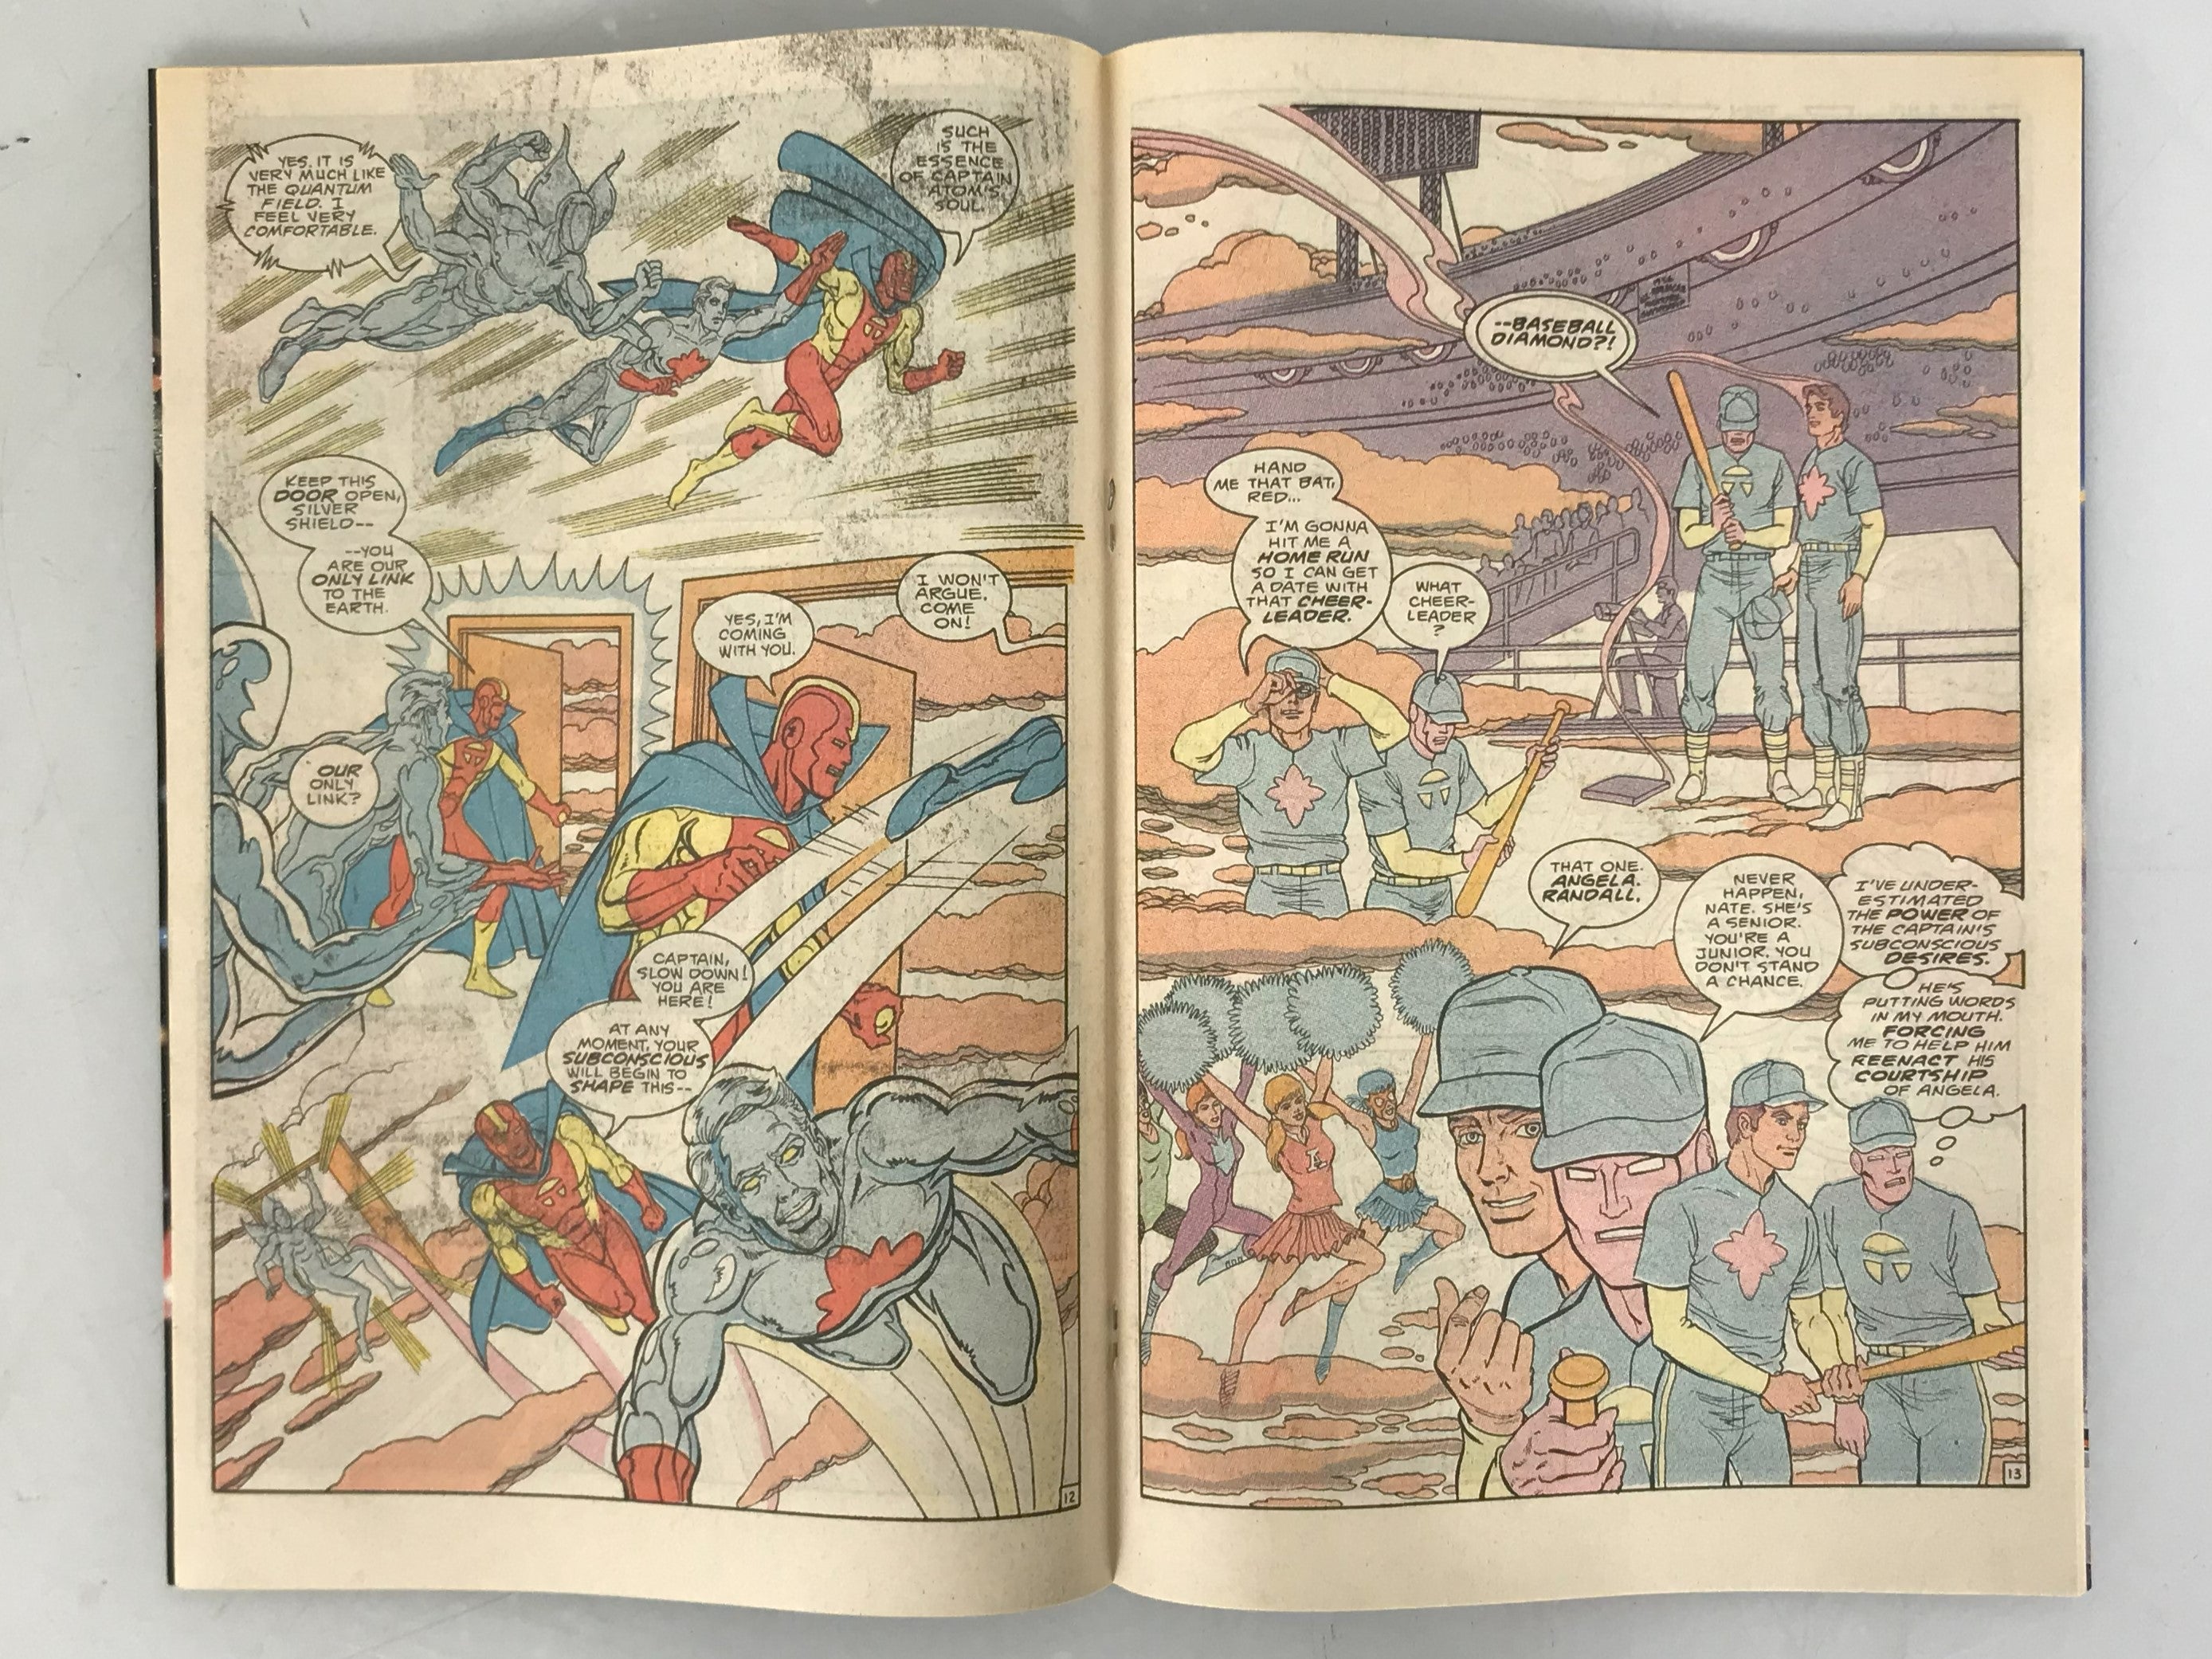 Captain Atom 1-43 1986-1990